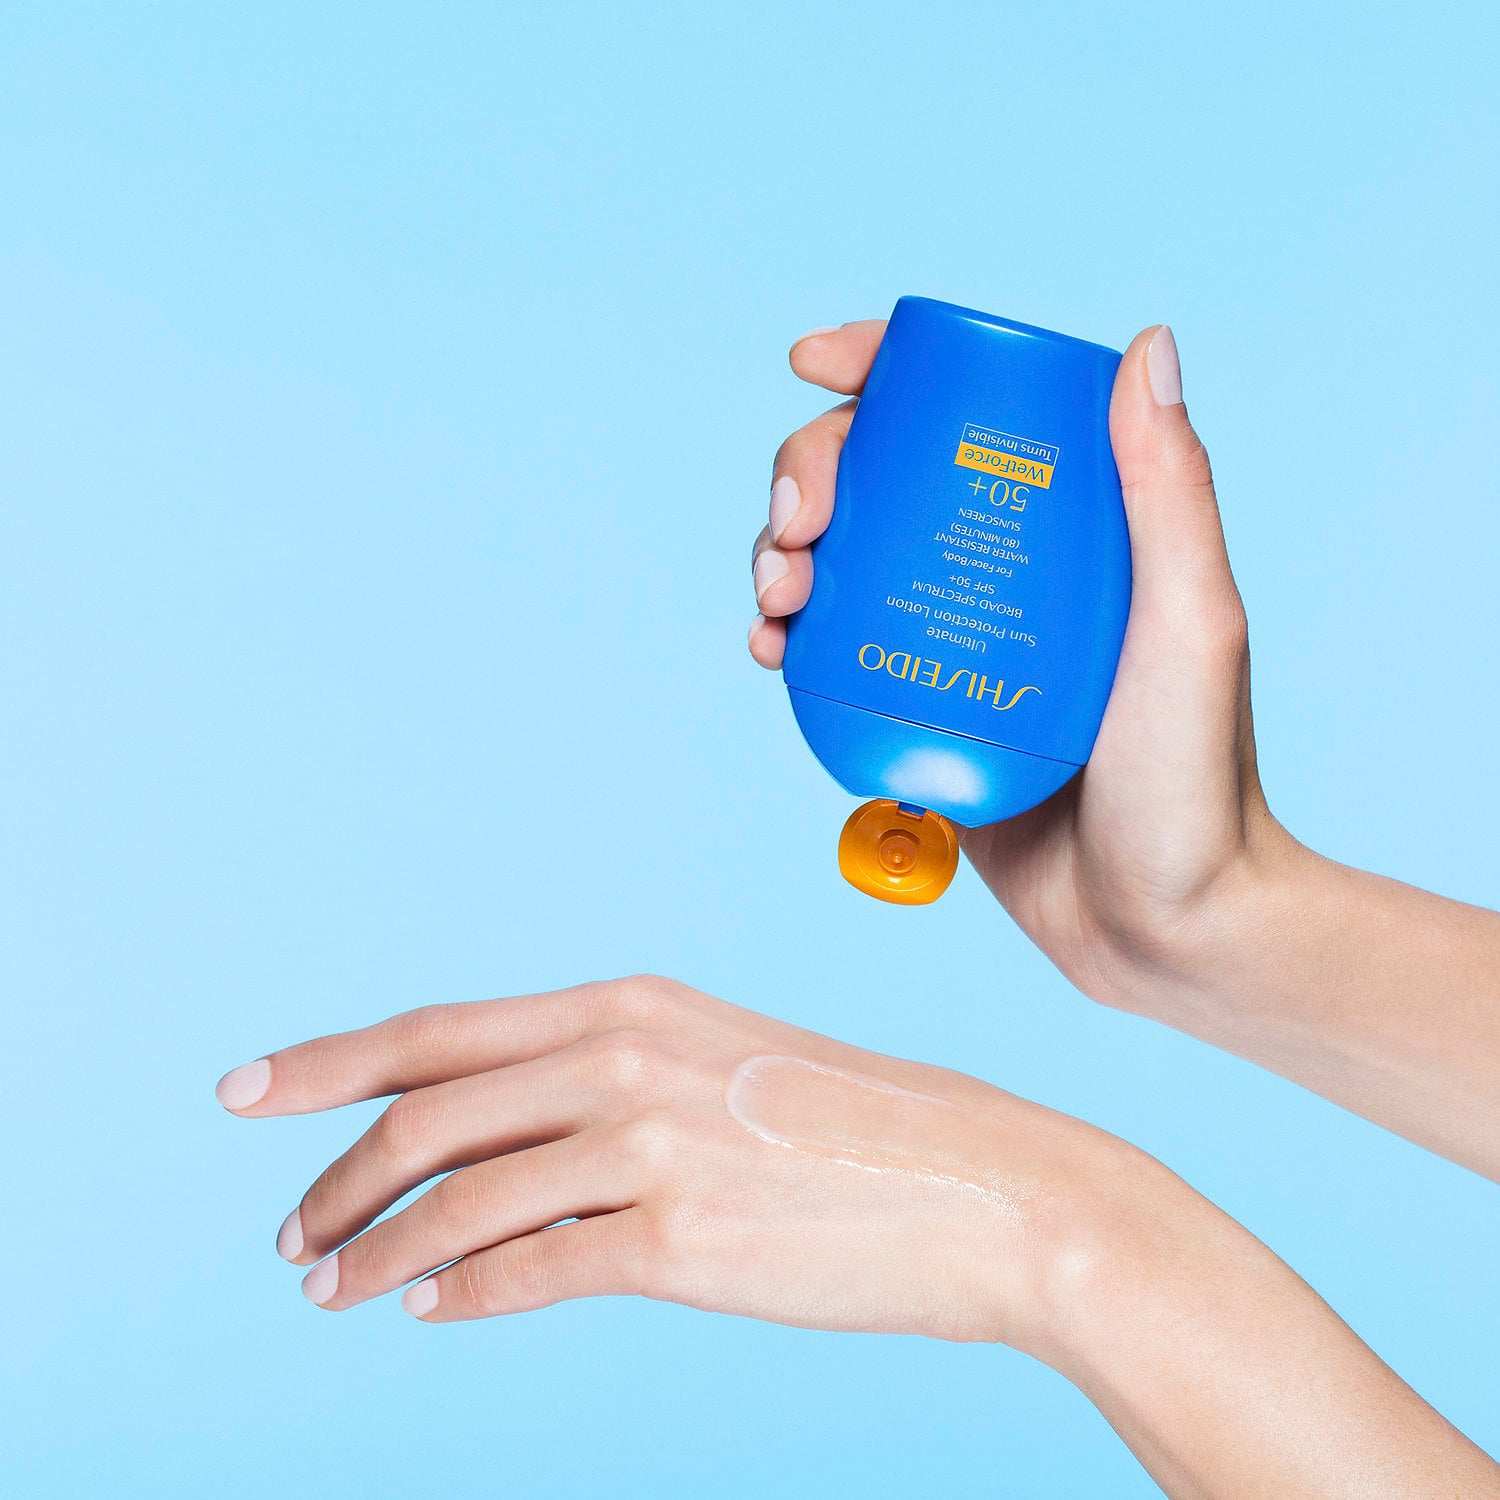 Hautpflege im Sommer Sonnenschutz Handpflege Sonnencreme SPF Faktor Shiseido Kosmetik